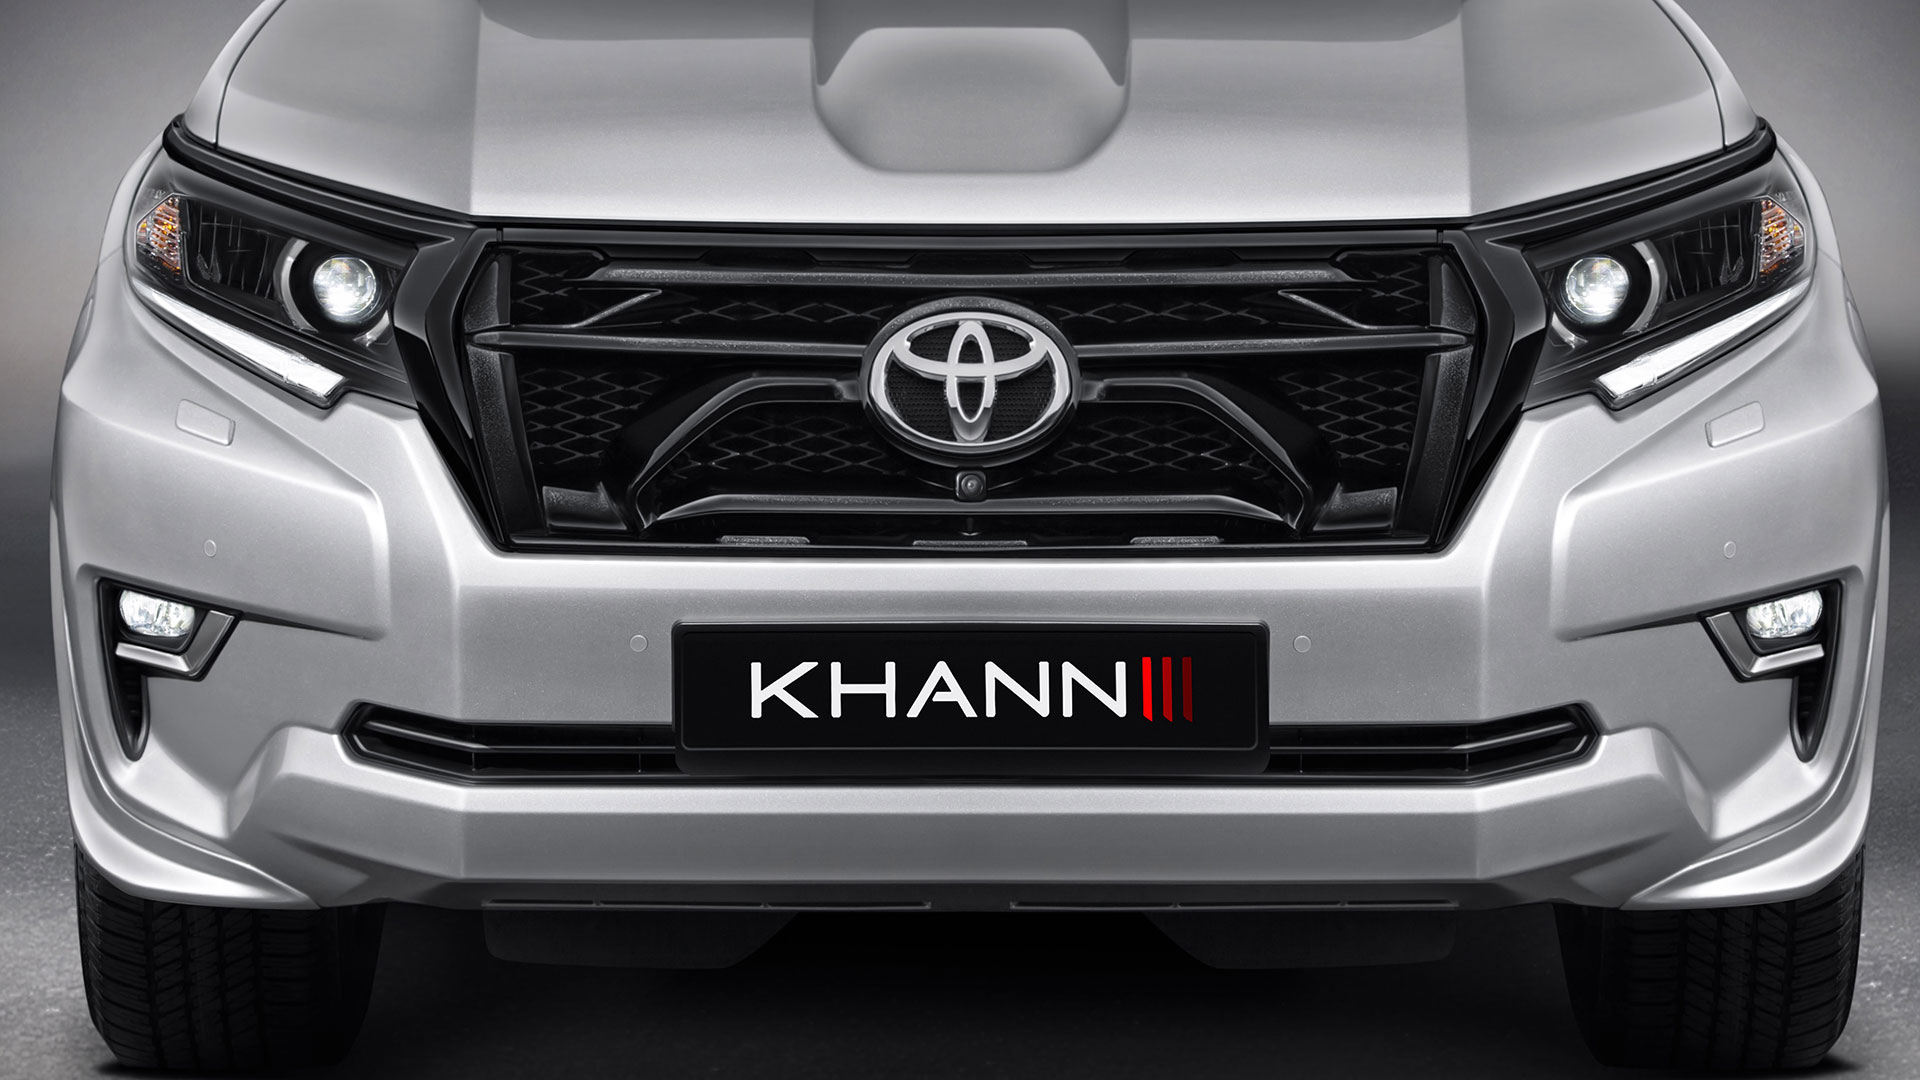 Check our price and buy Khann body kit for Toyota Land Cruiser Prado!